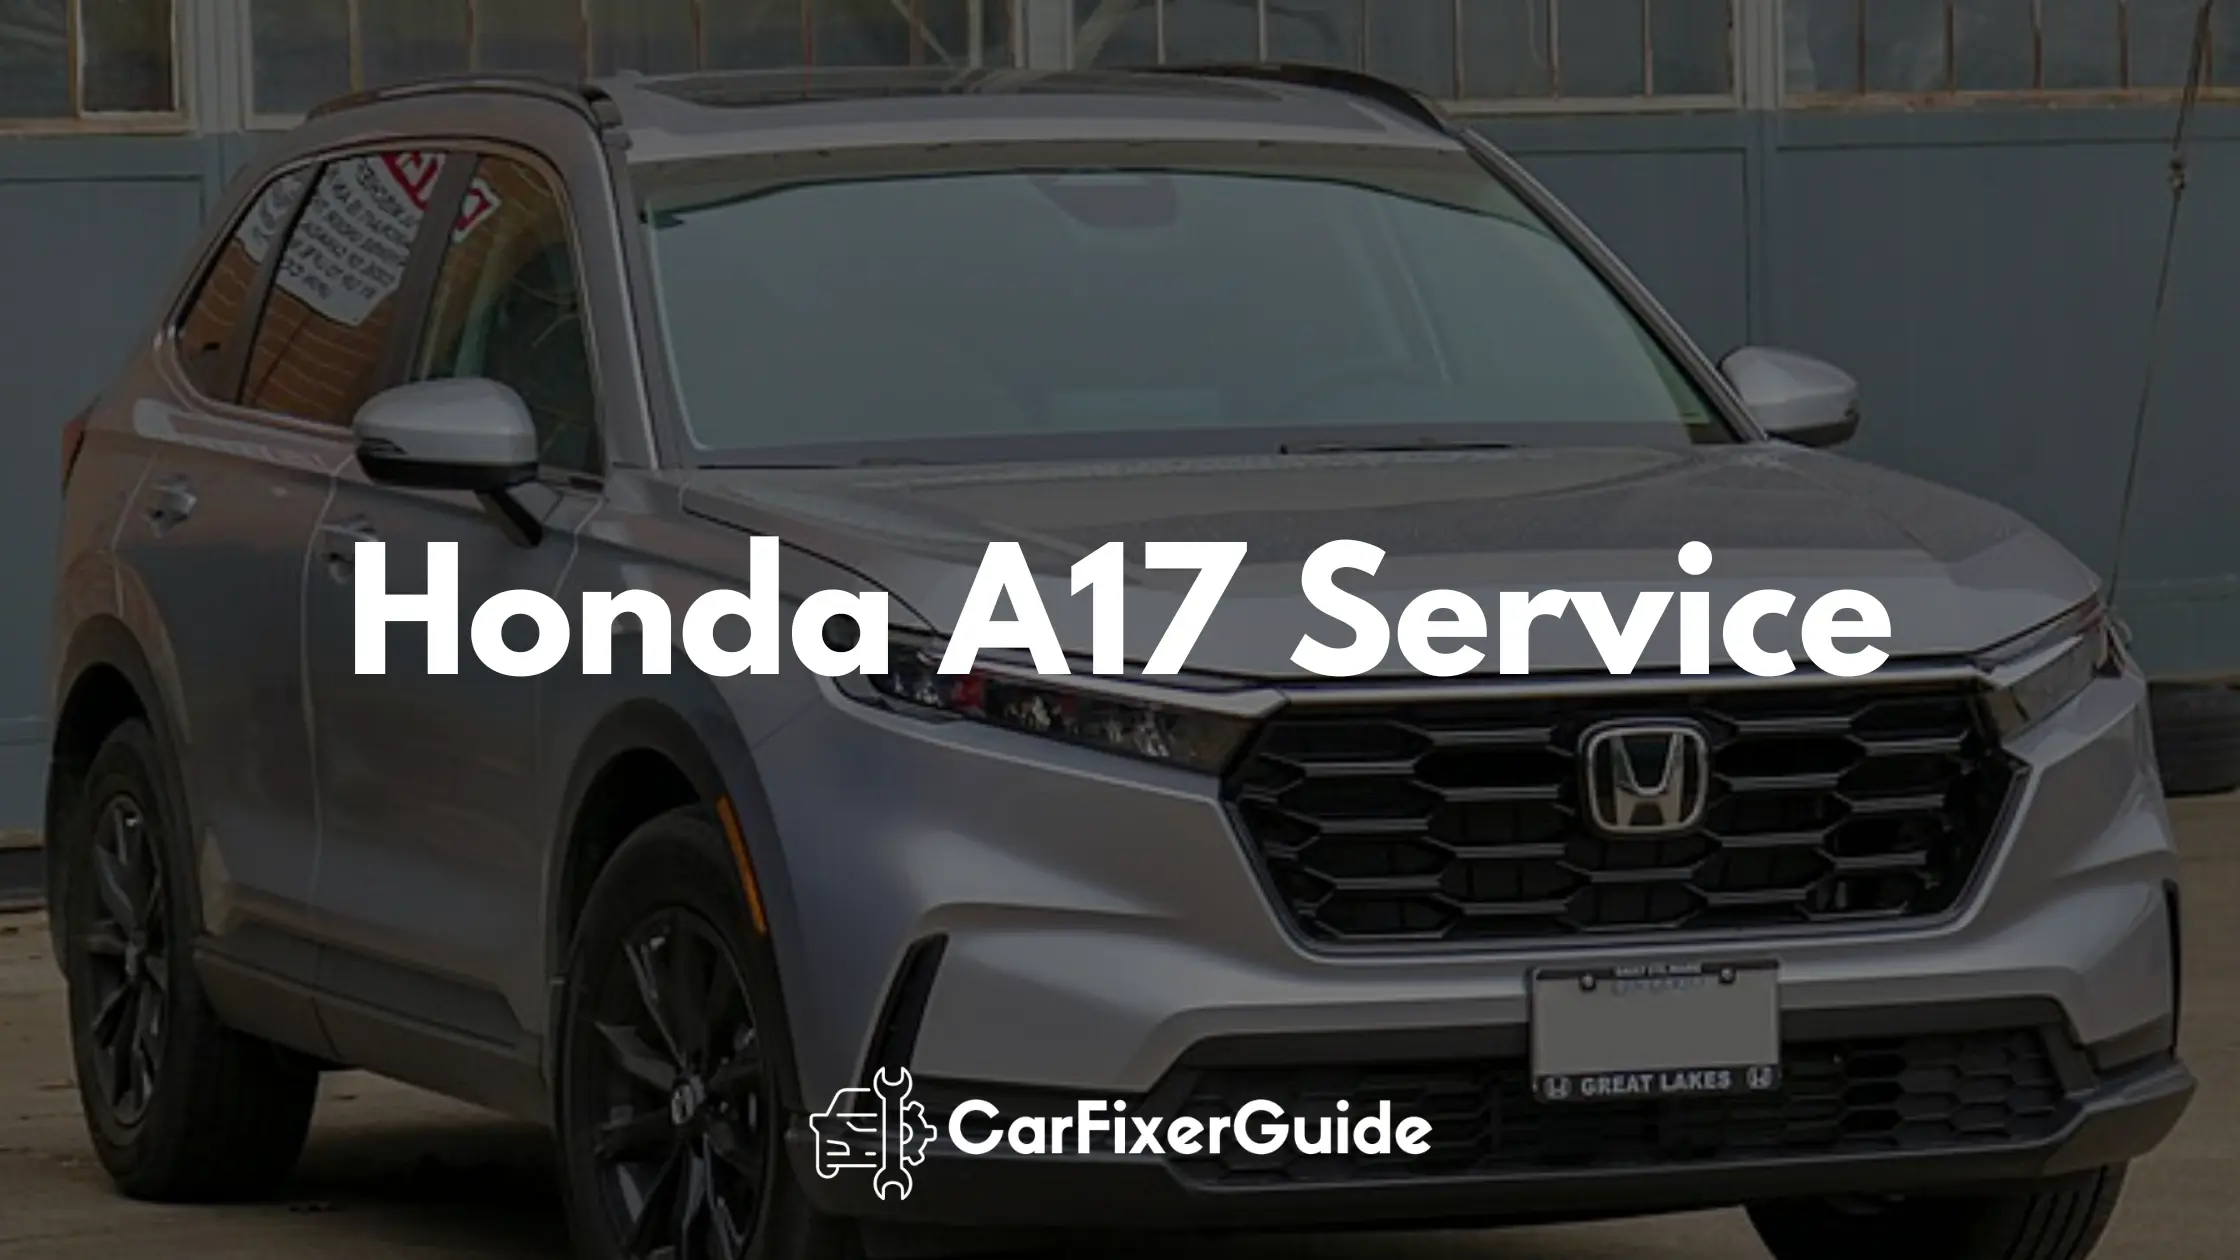 Honda A17 Service